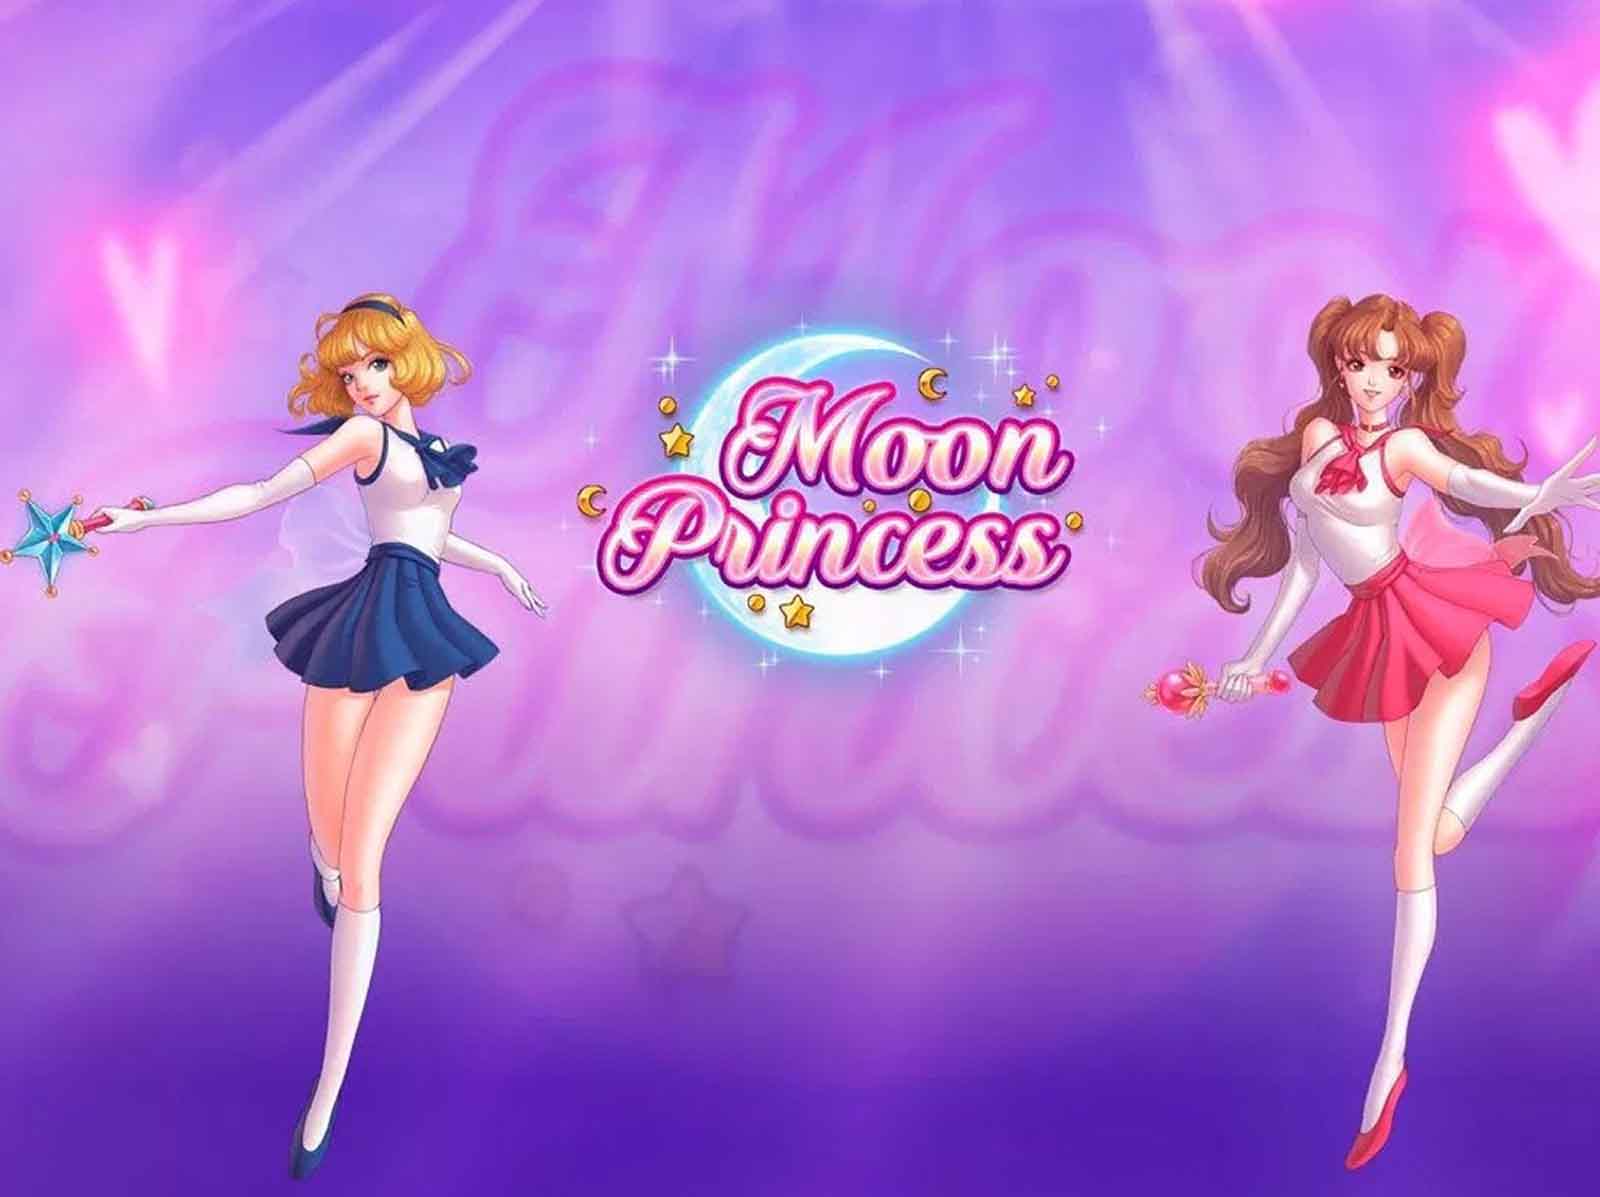 Moon princess слот. Сейлор Мун игровые автоматы. Moon Princess. Слот Princess. Мун принцесс слот.